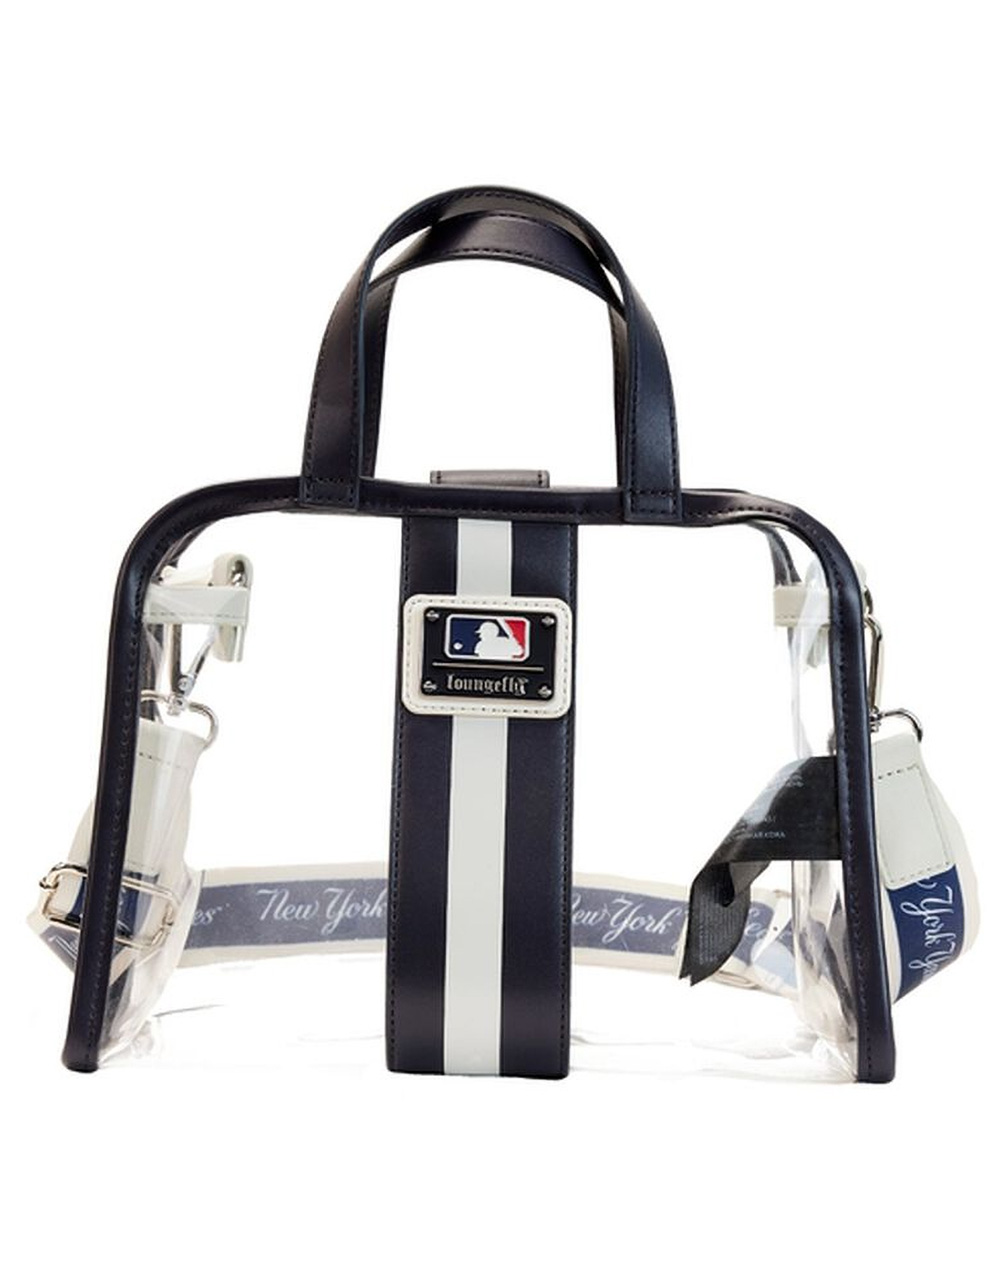 New York Yankees MLB Side Bag